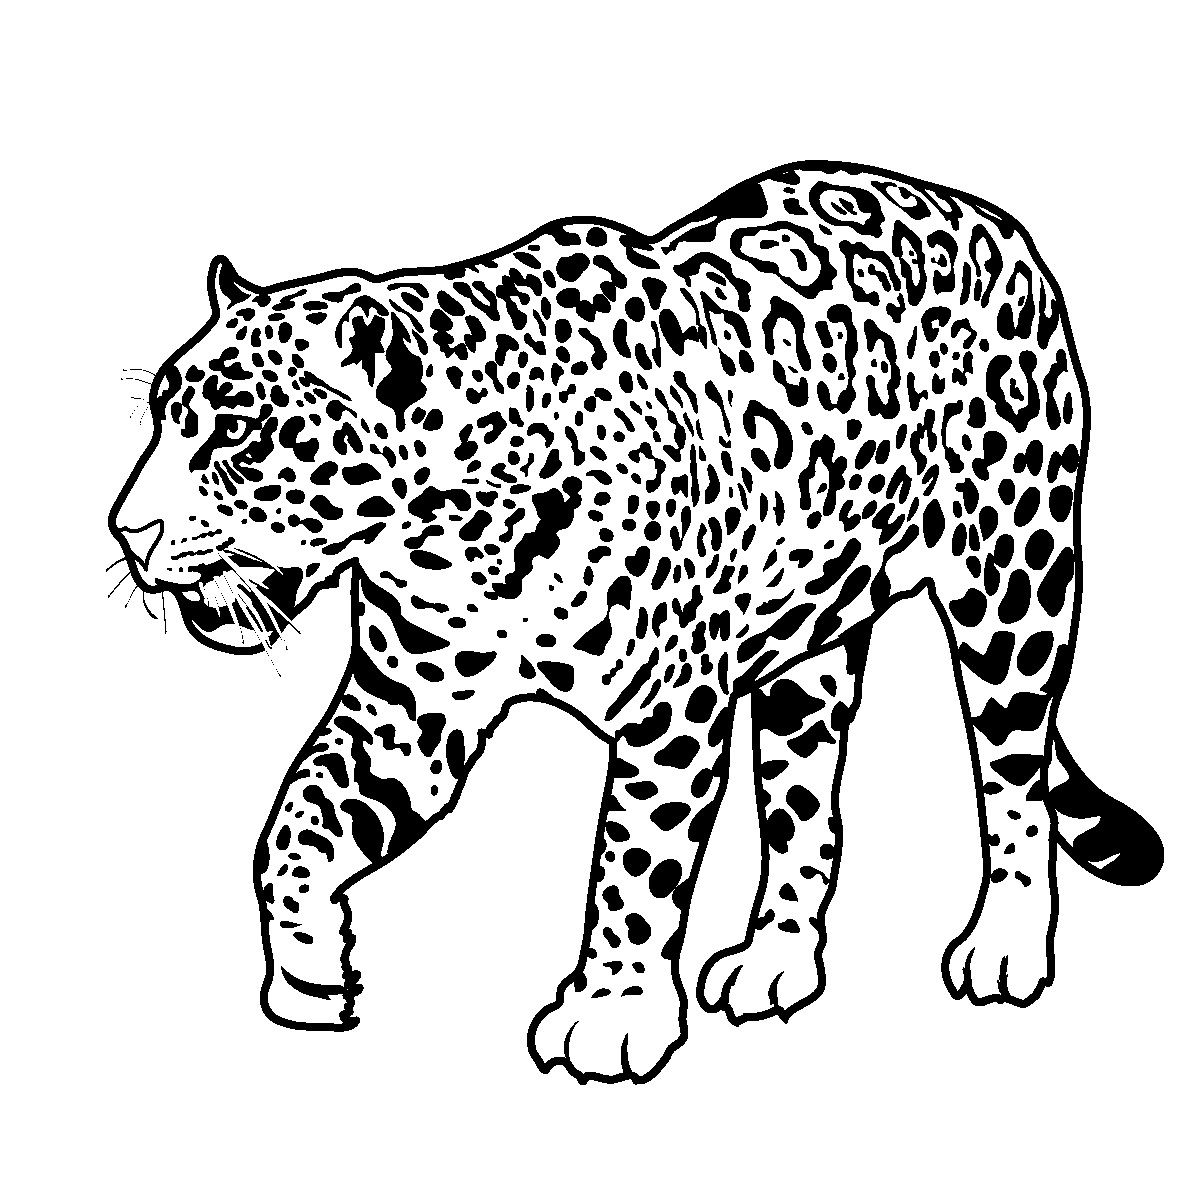 kumpulan gambar sketsa macan